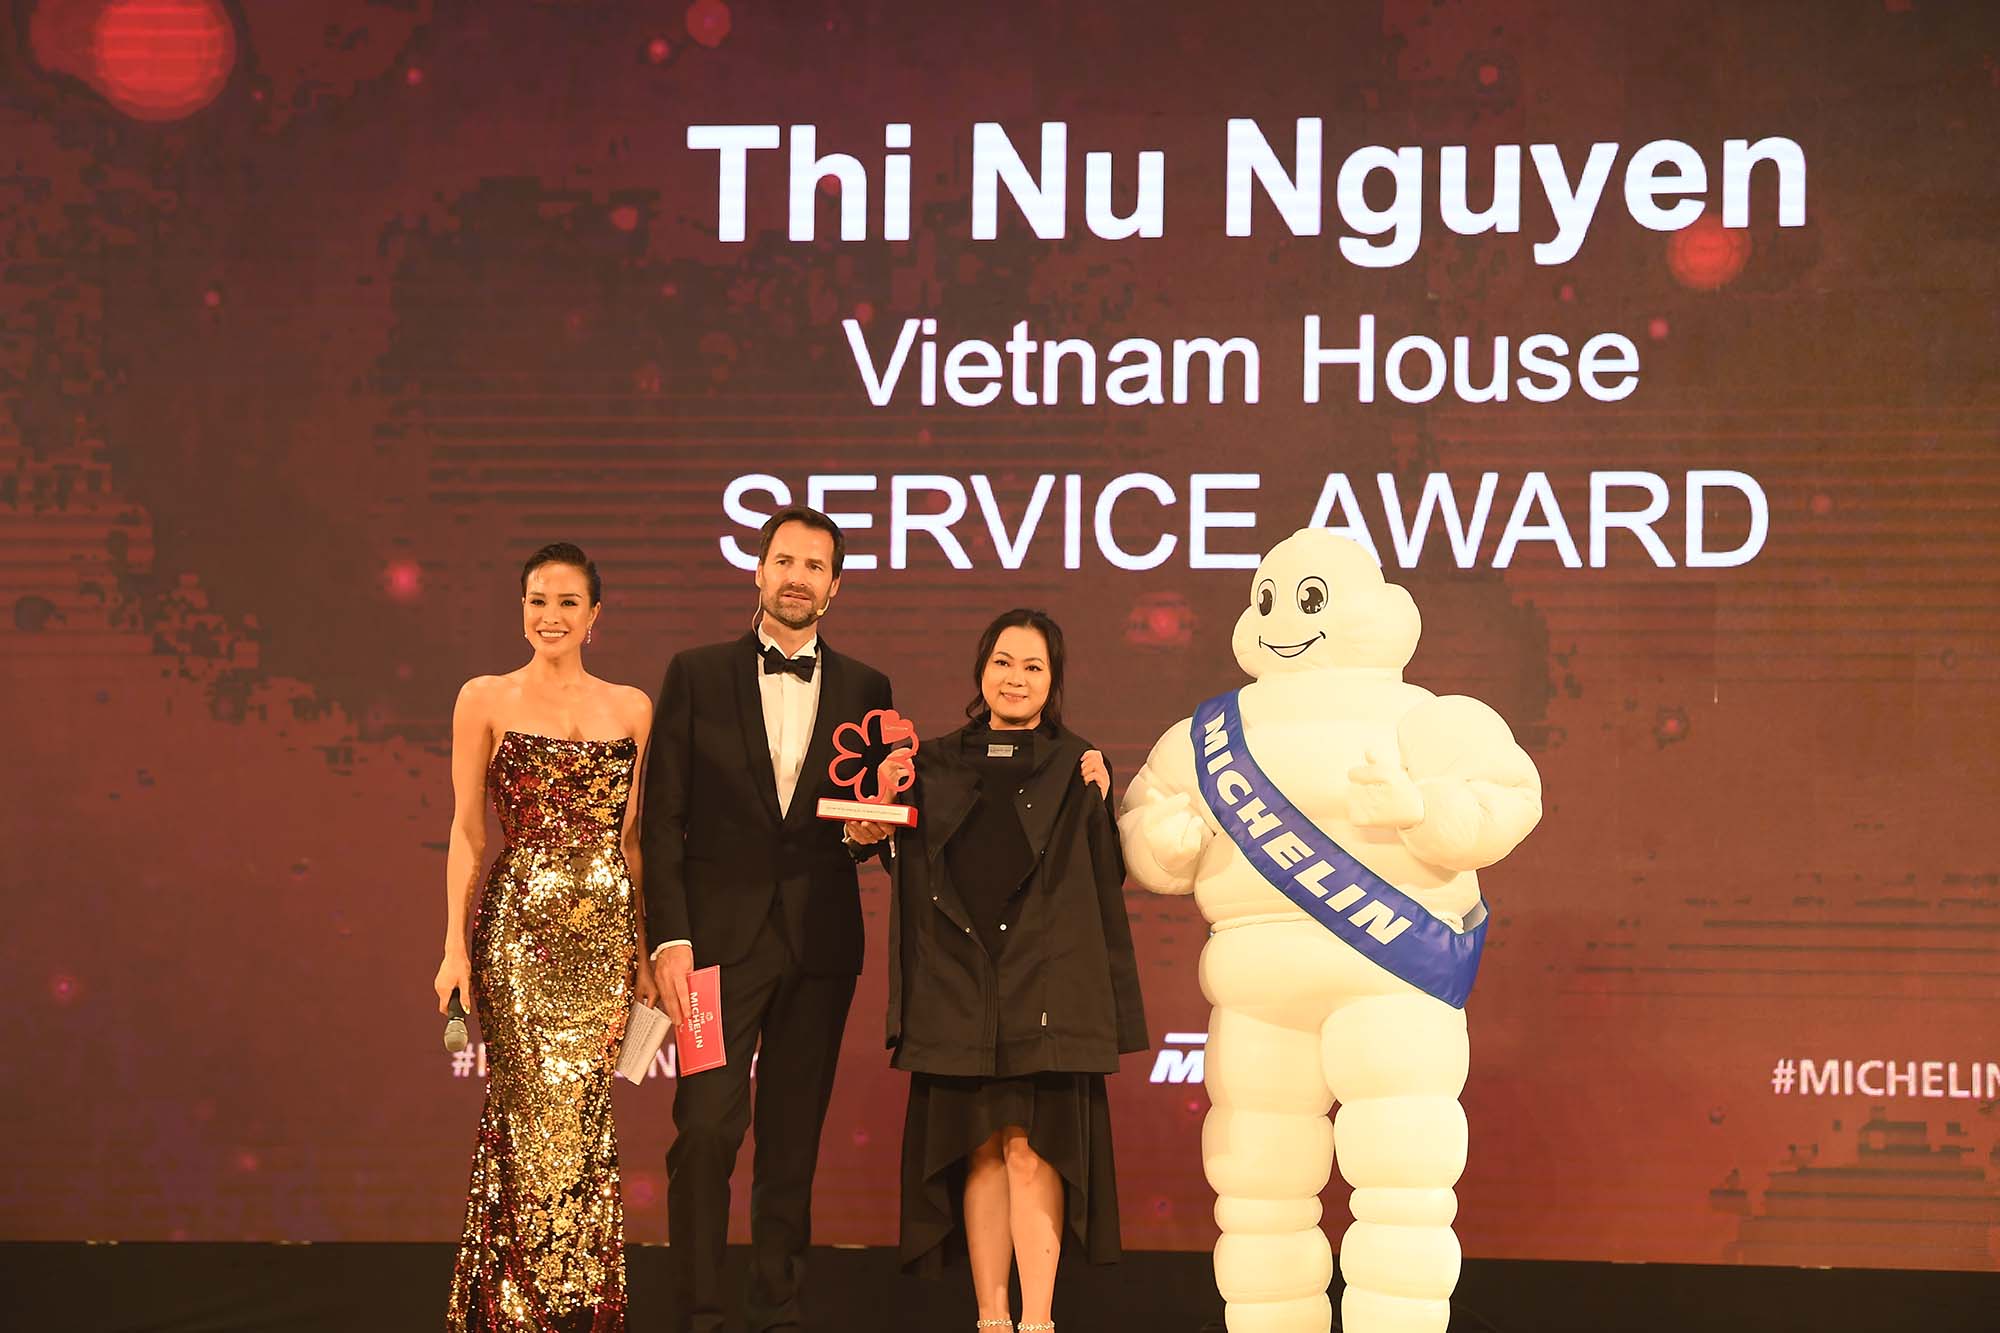 Nguyễn Thị Nụ service michelin